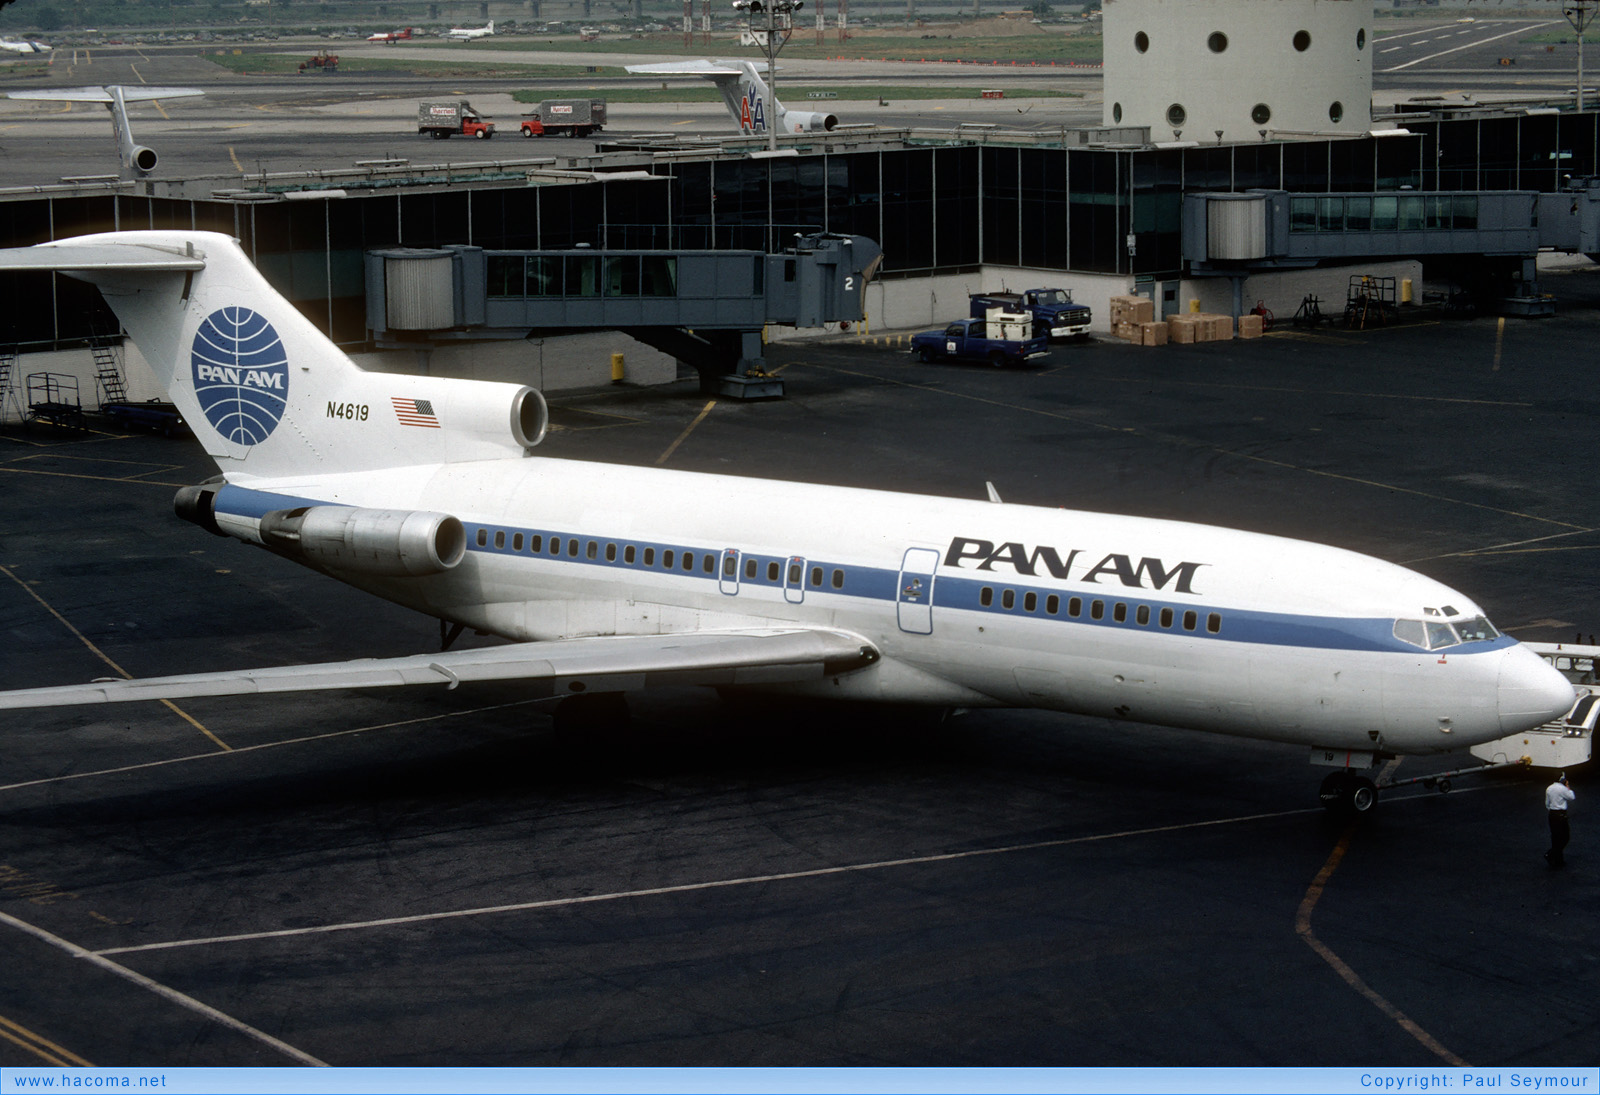 Photo of N4619 - Pan Am Clipper Roman - LaGuardia Airport - Aug 11, 1980